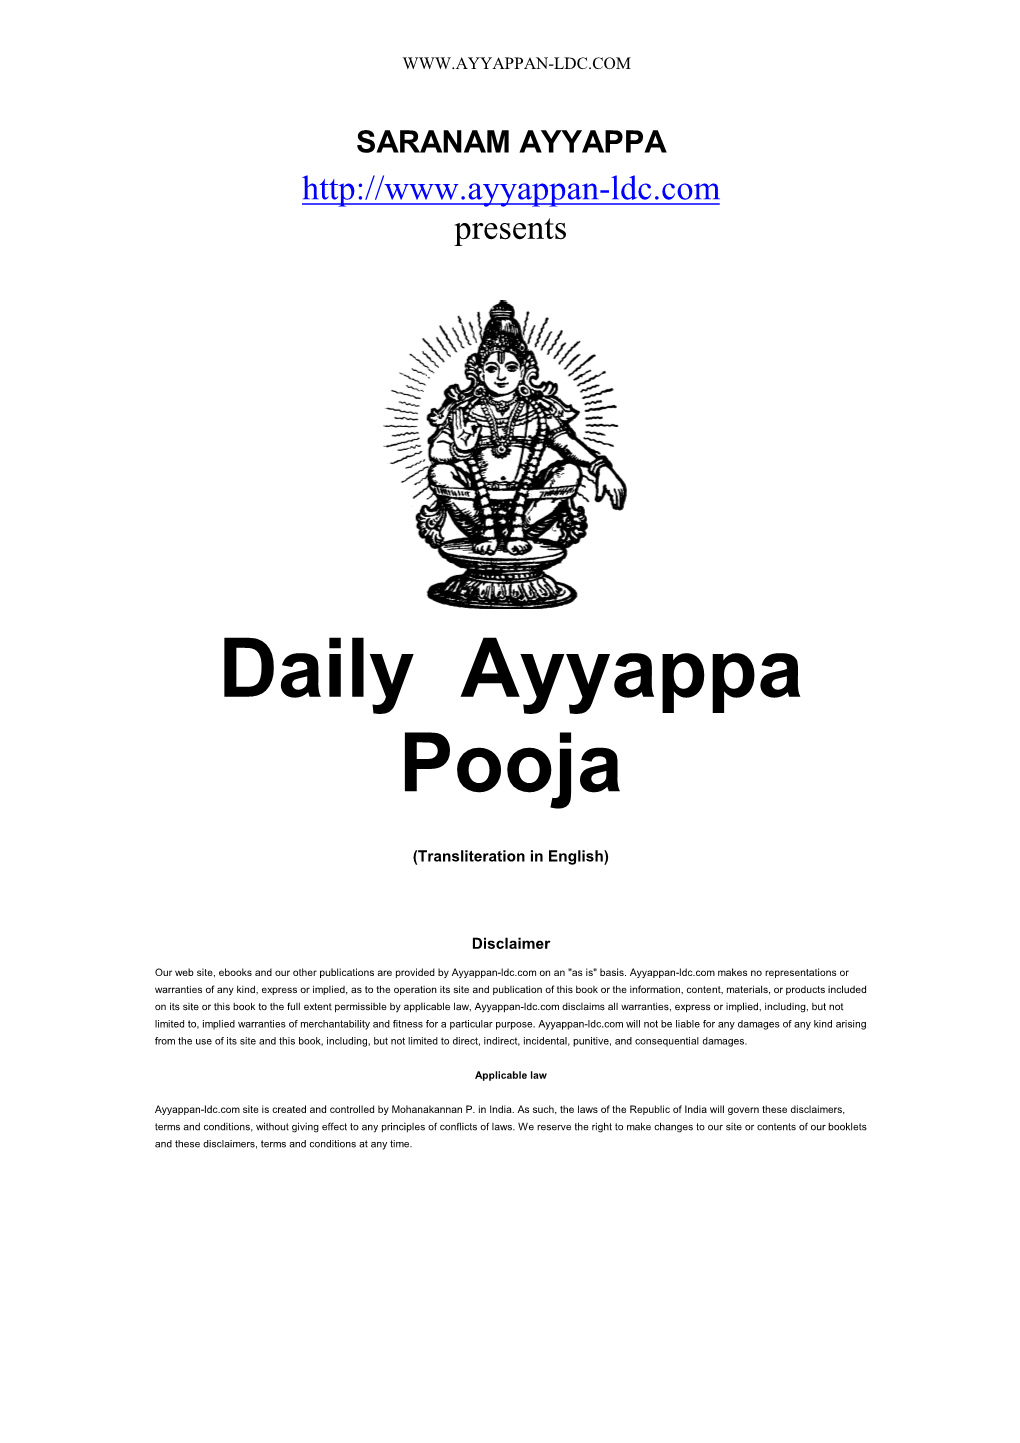 Daily Ayyappa Pooja